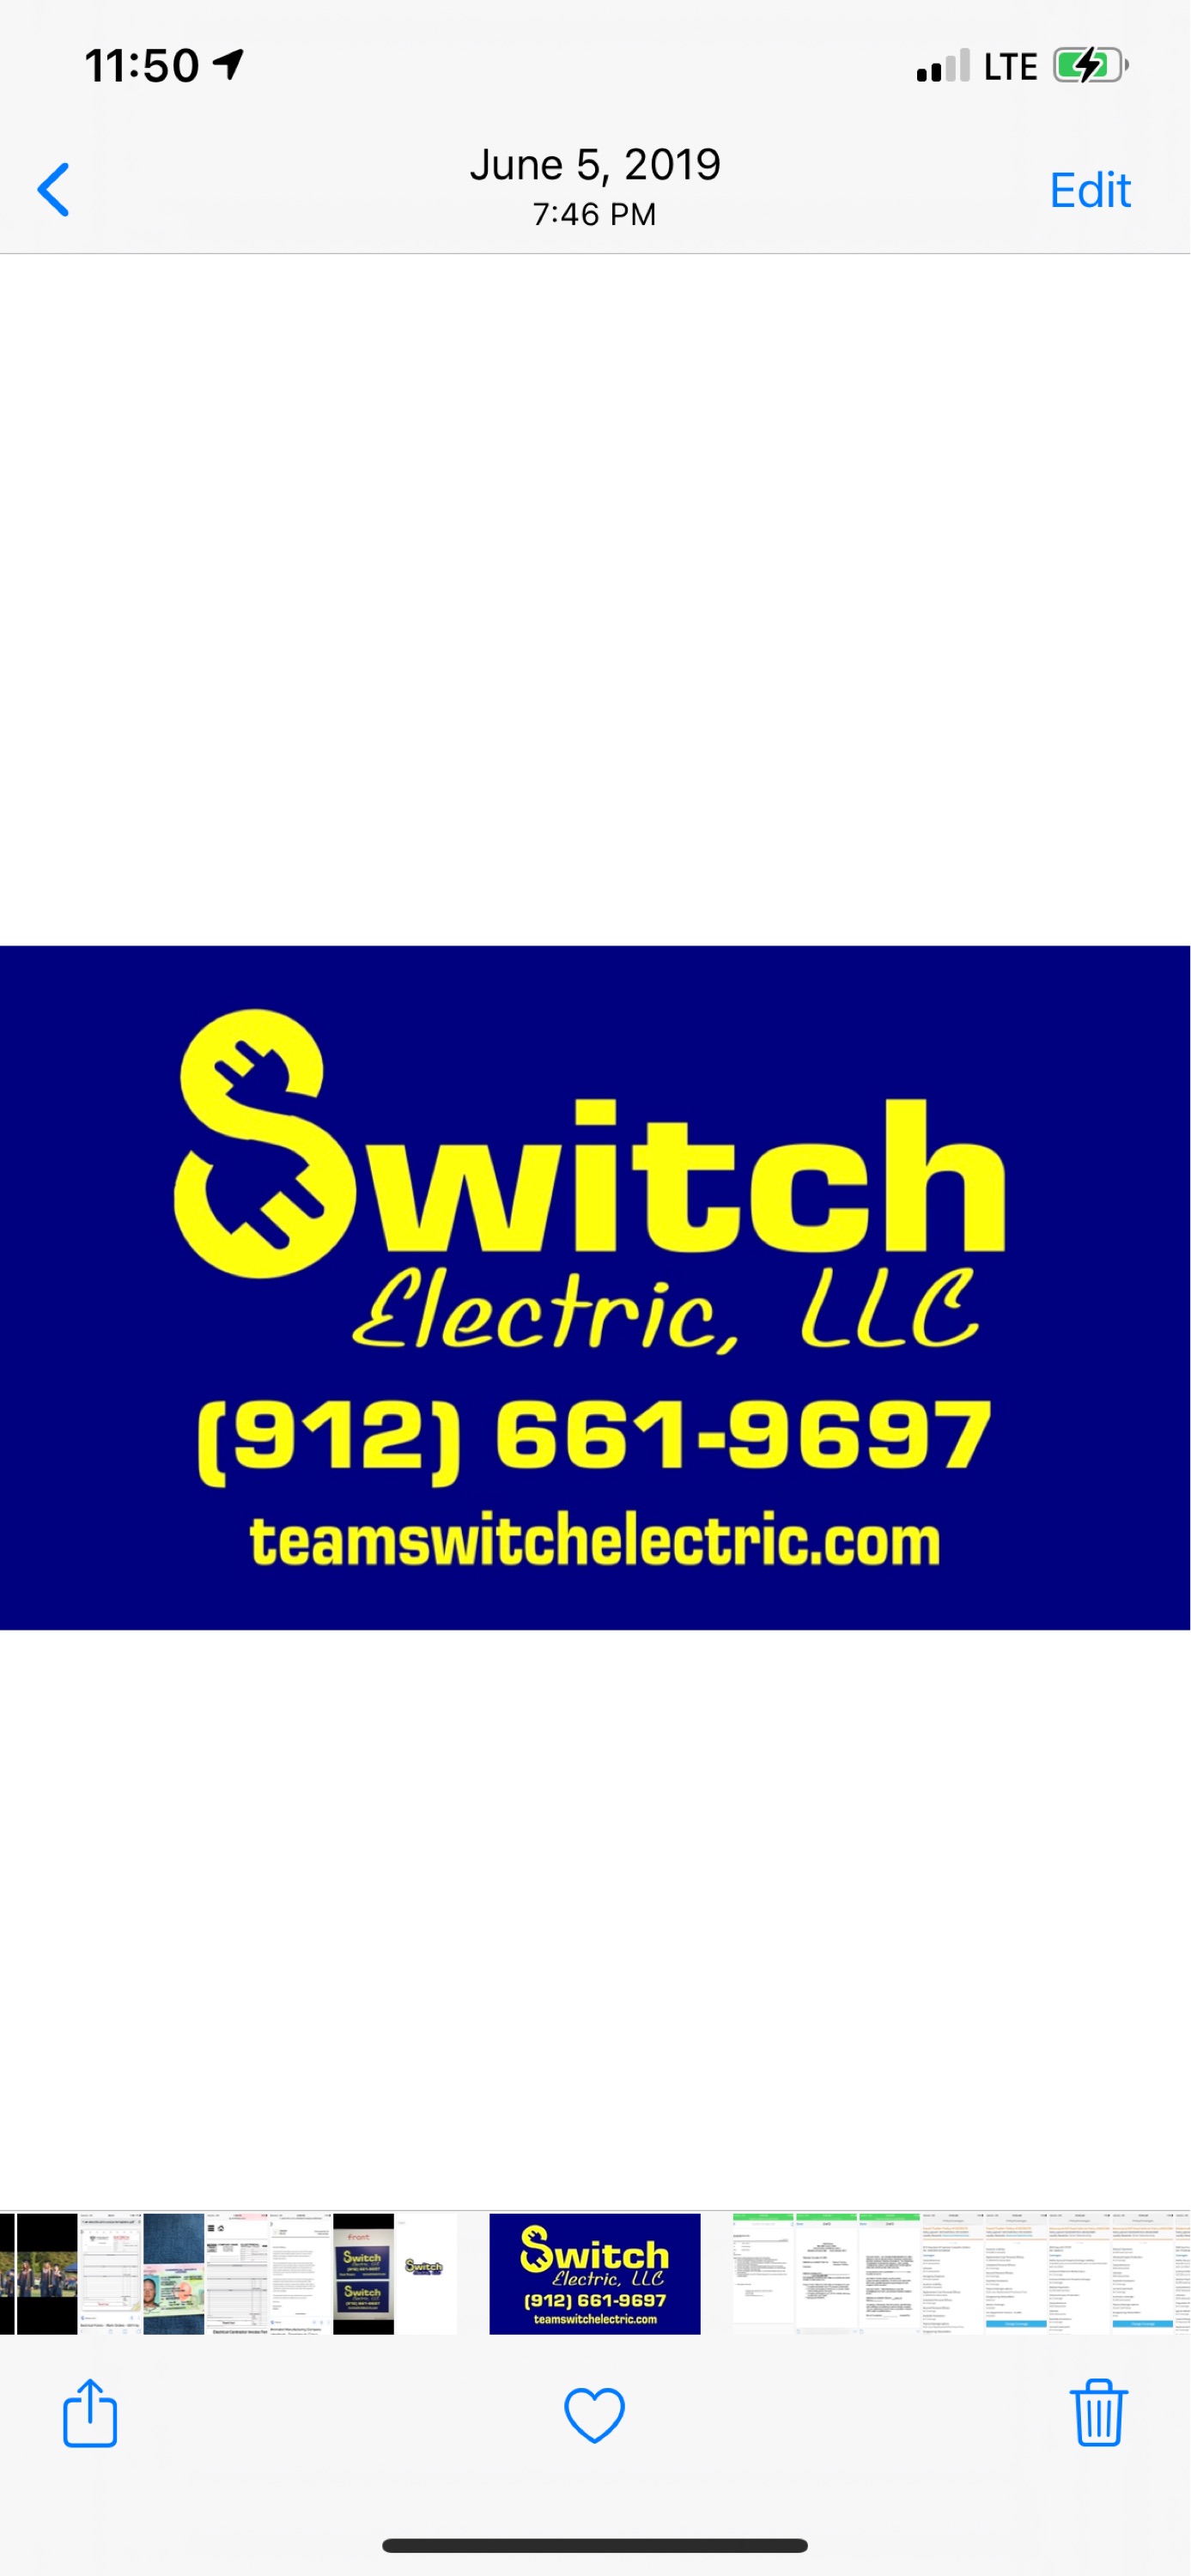 Switch Electric, LLC Logo